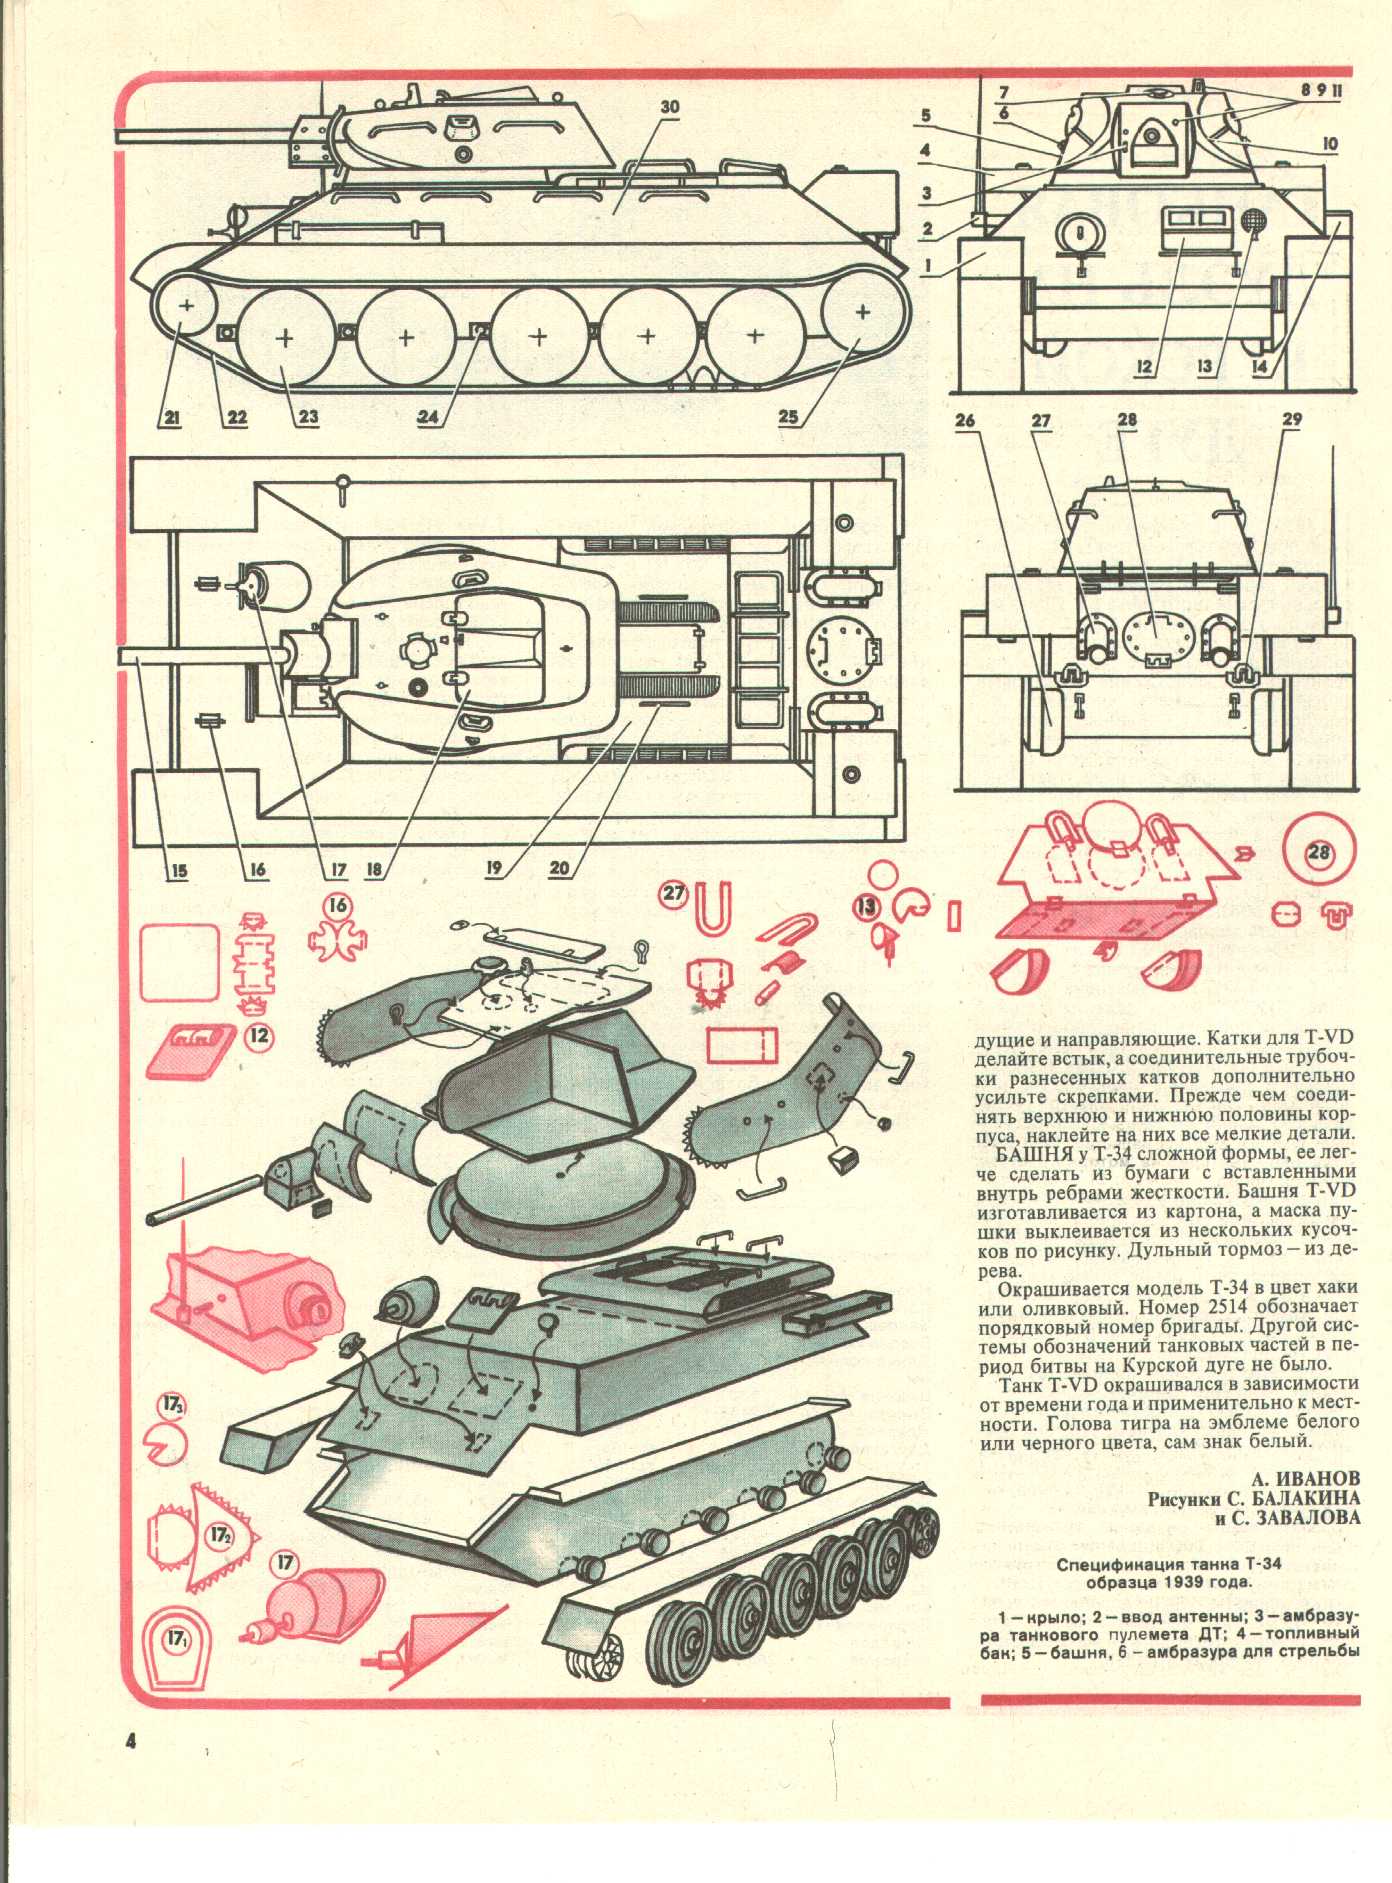 Создаем макет легендарного танка Т-34